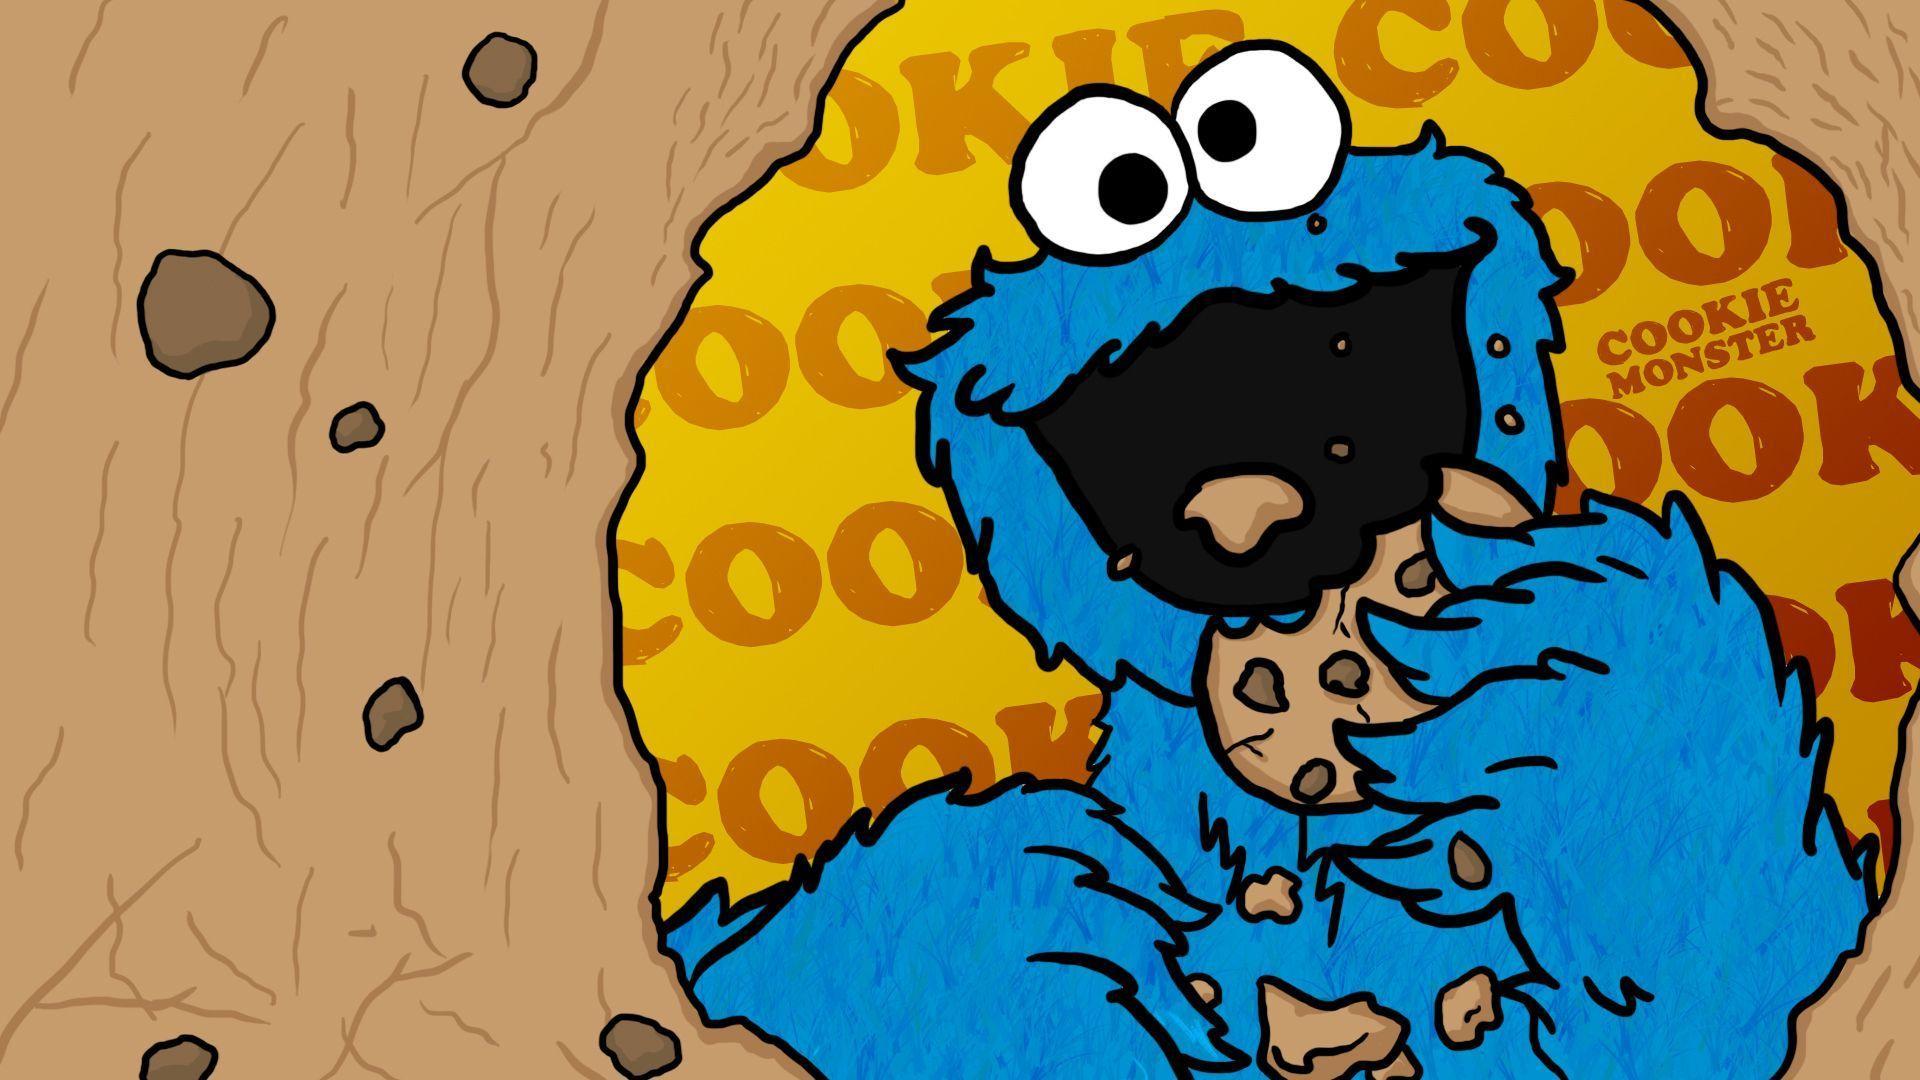 Cookie Monster PNG HD - 139245